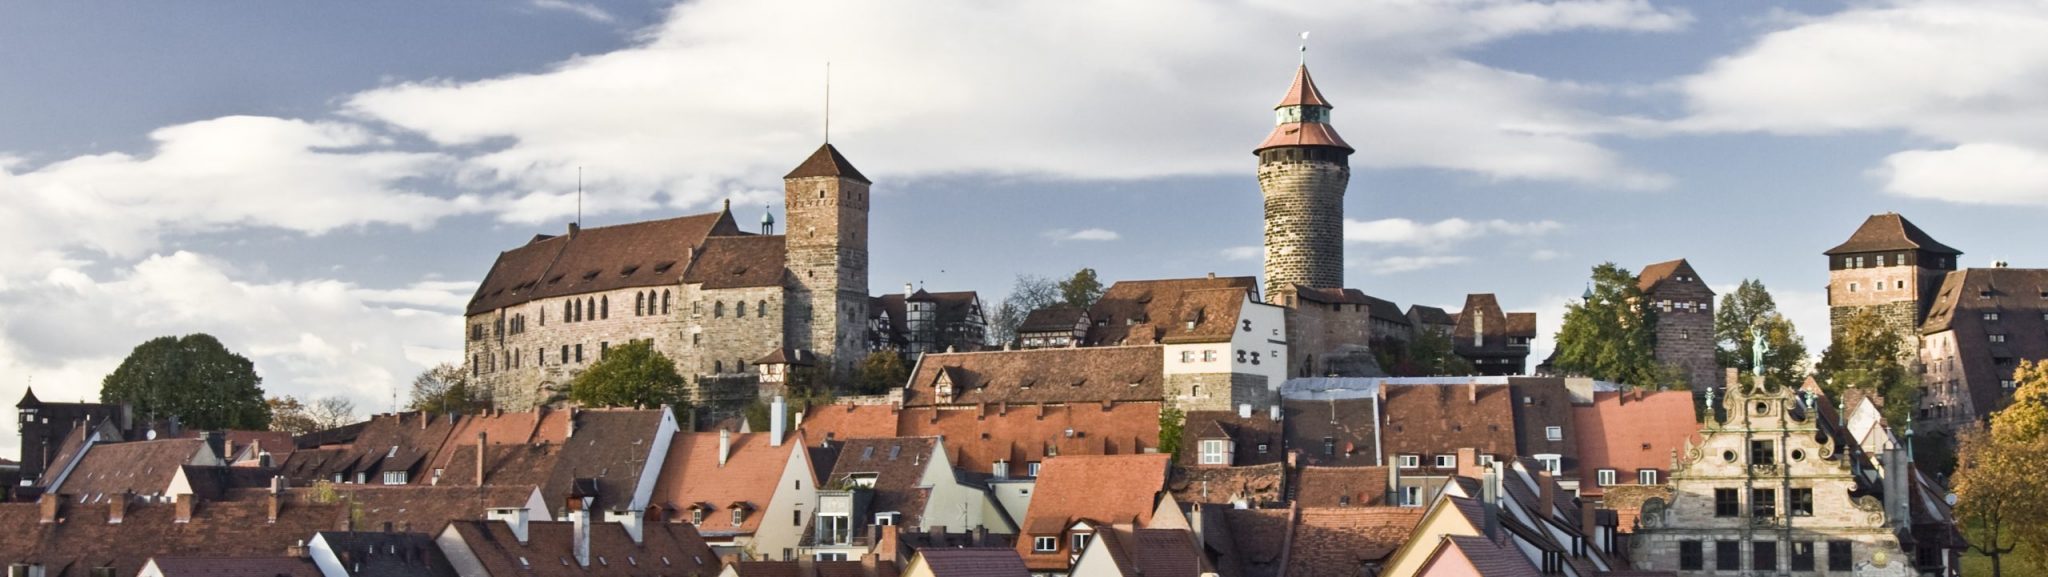 Panorama Nürnberg: Blick auf die Kaiserburg